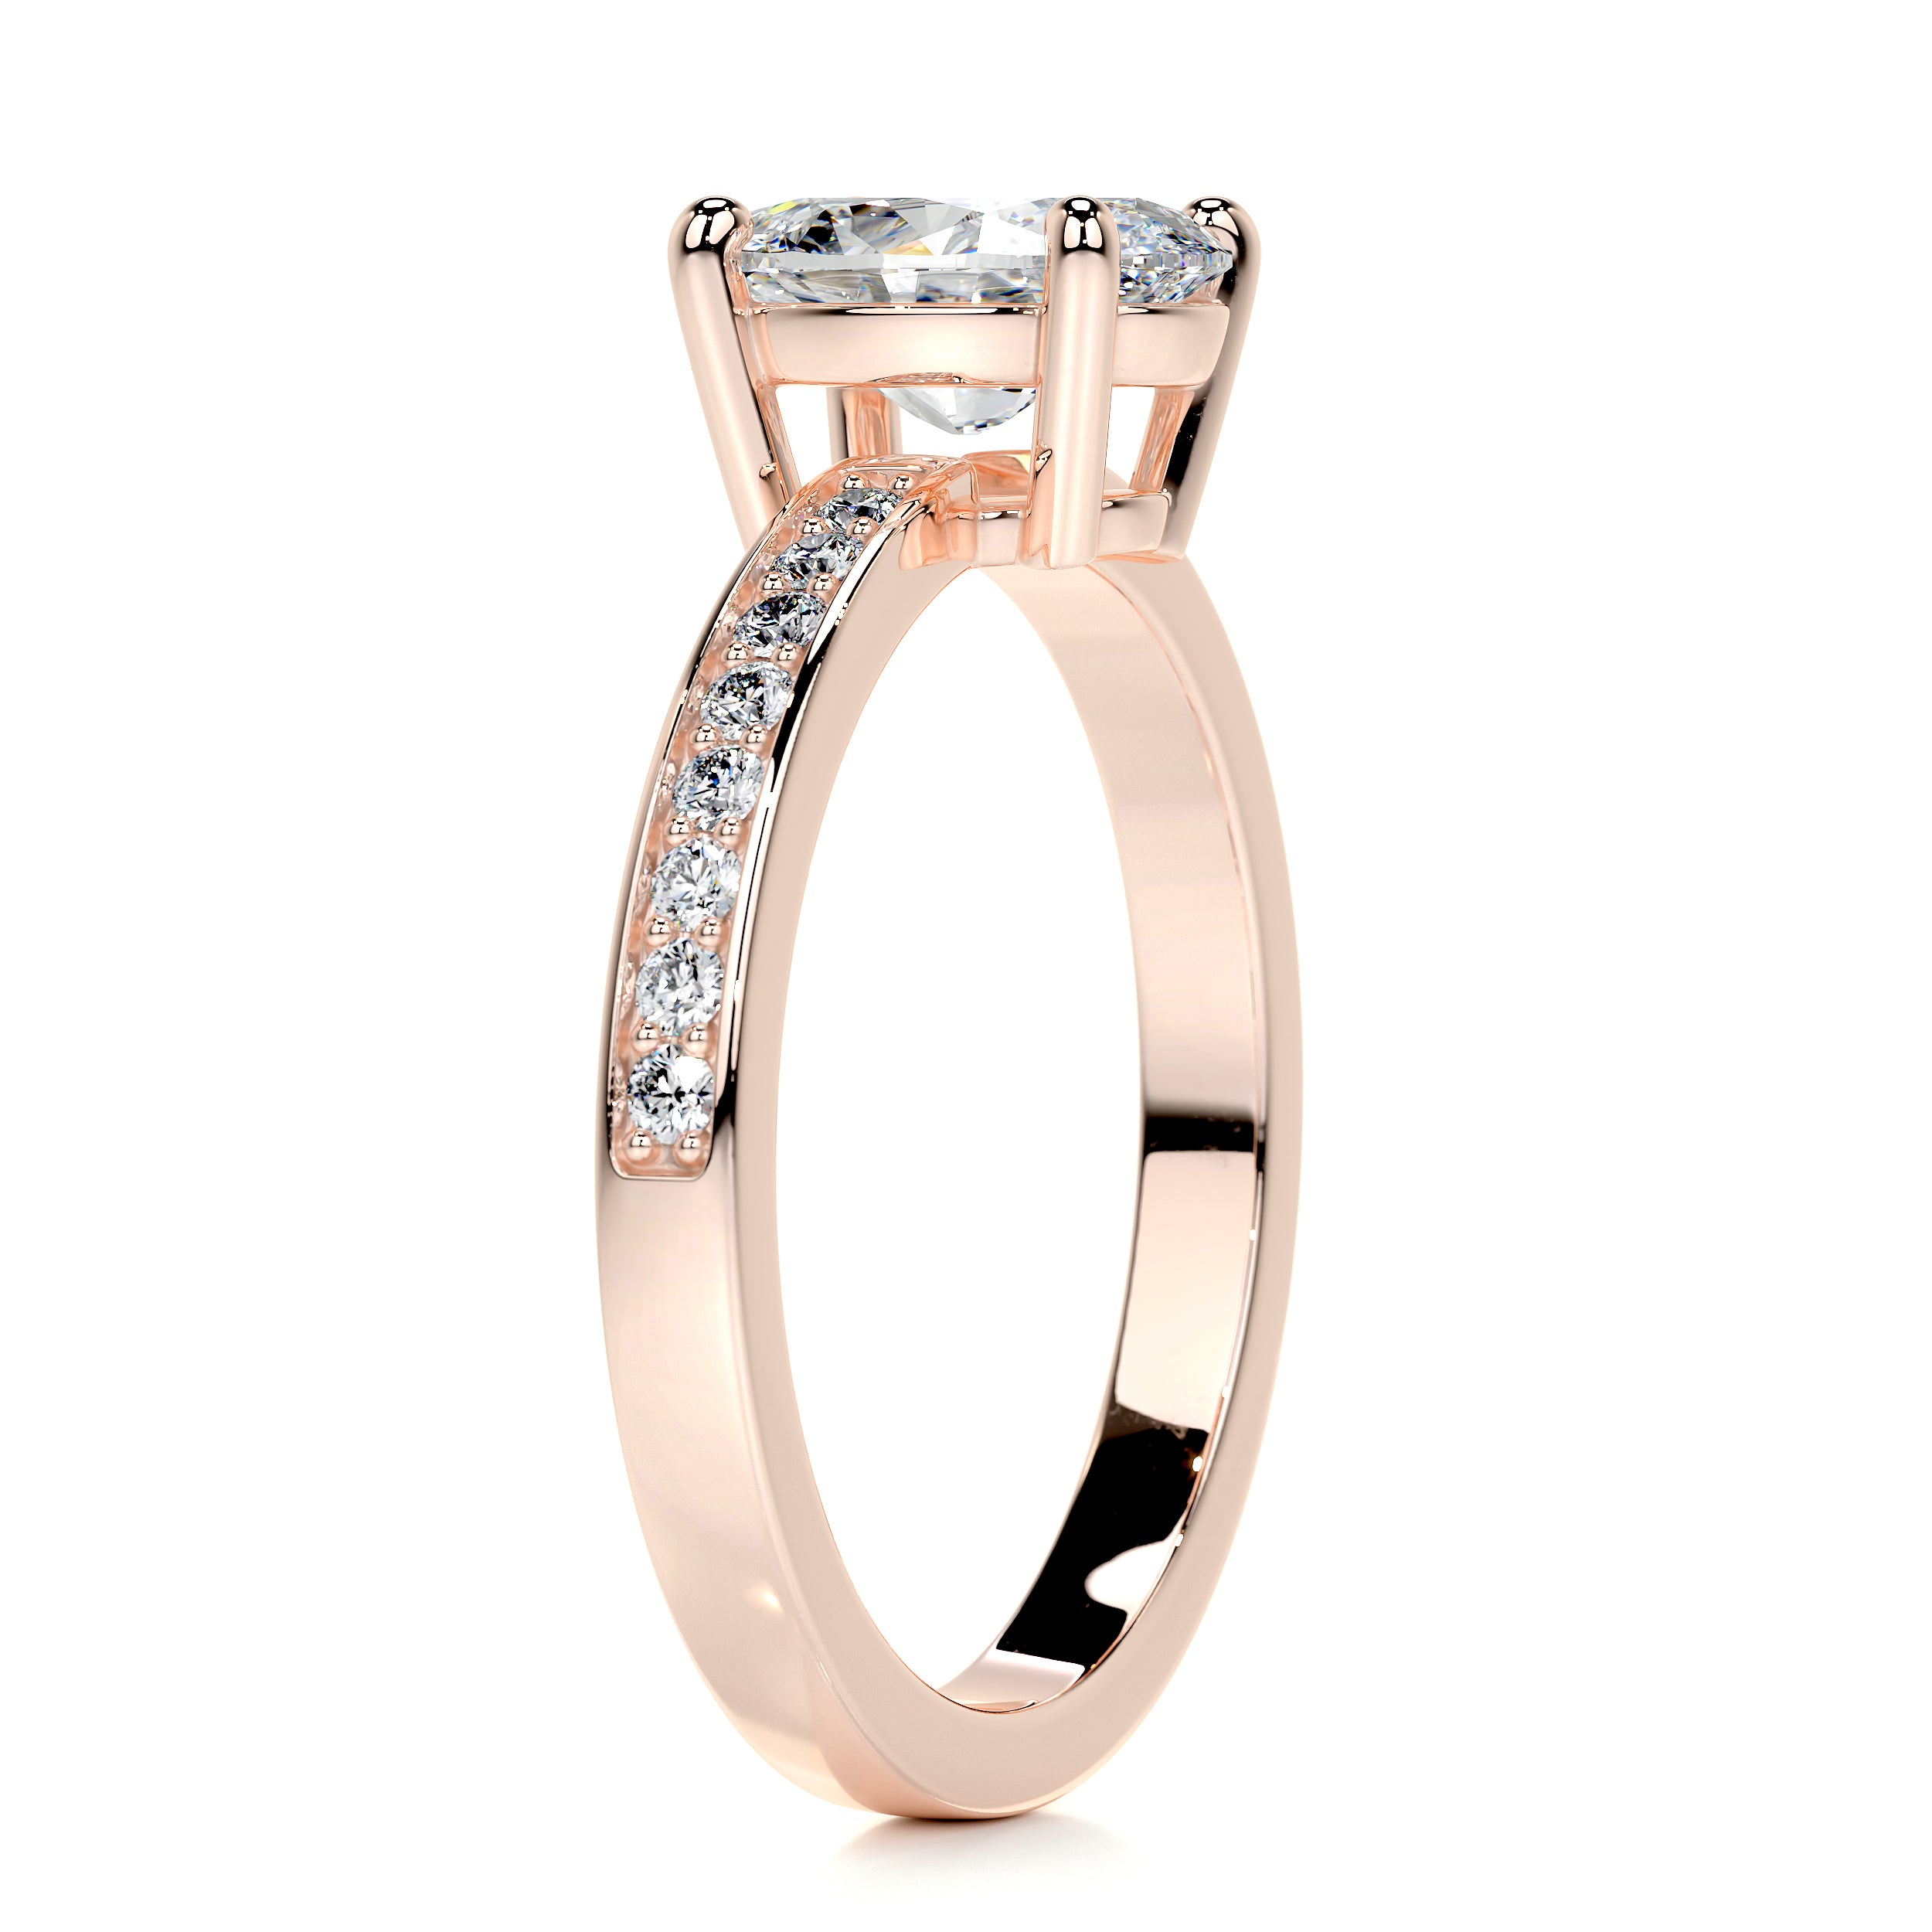 Giselle Diamond Engagement Ring   (1.16 Carat) -14K Rose Gold